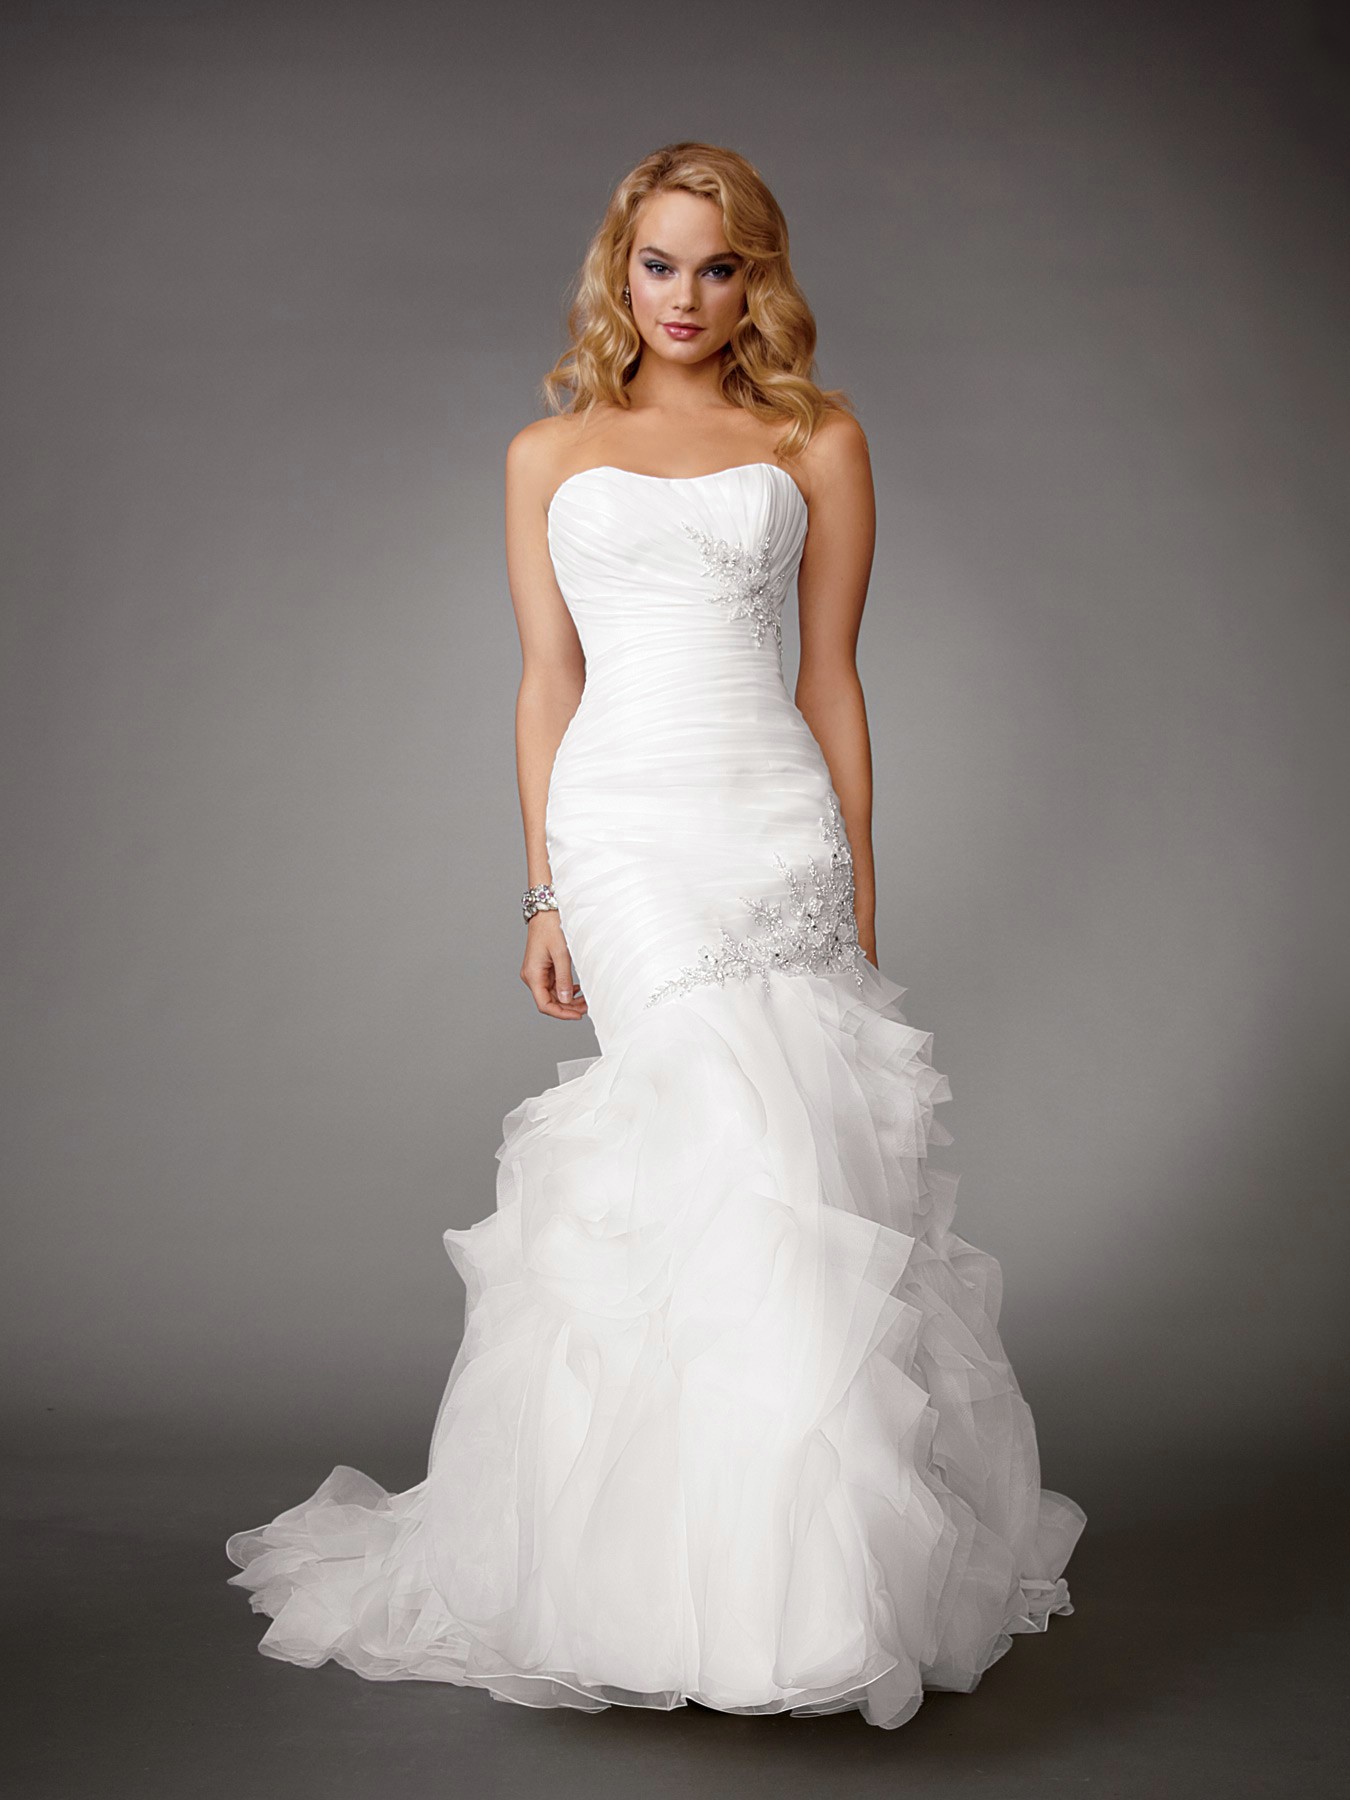 25 Mermaid Wedding Dresses Styles - Perfect Wedding Dress ...